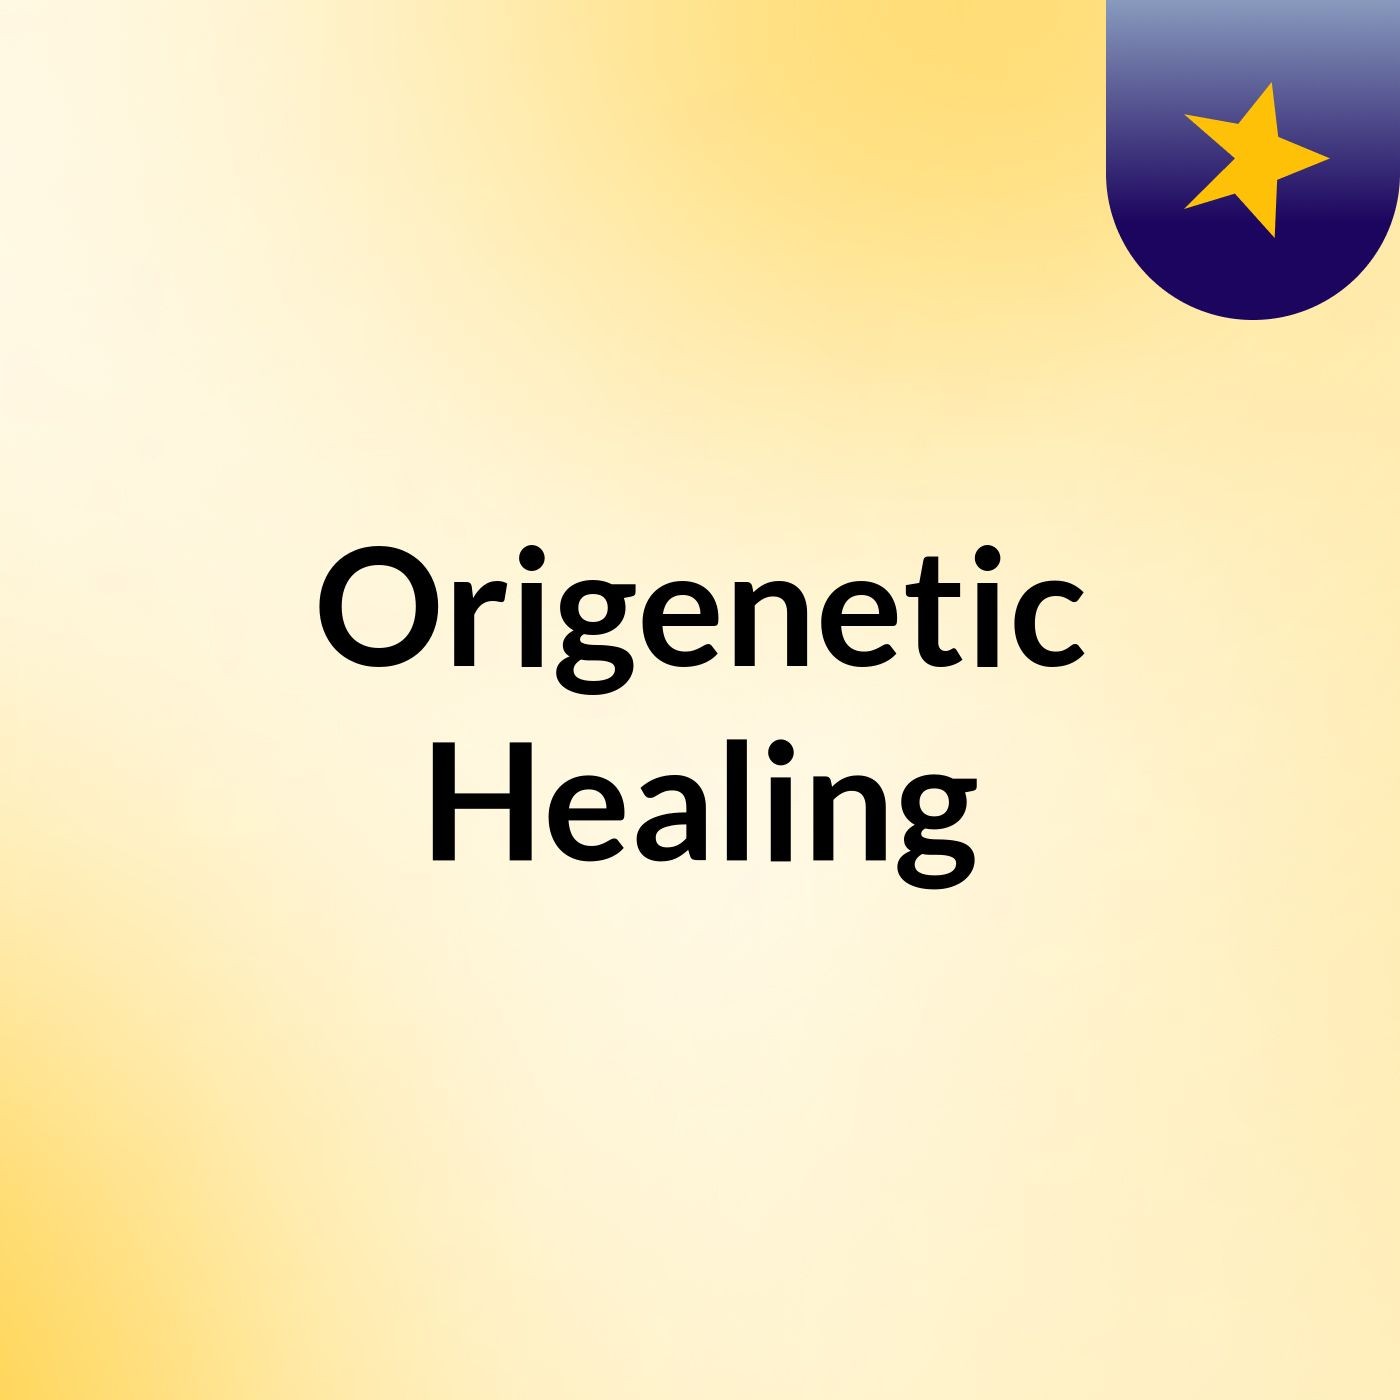 Origenetic Healing